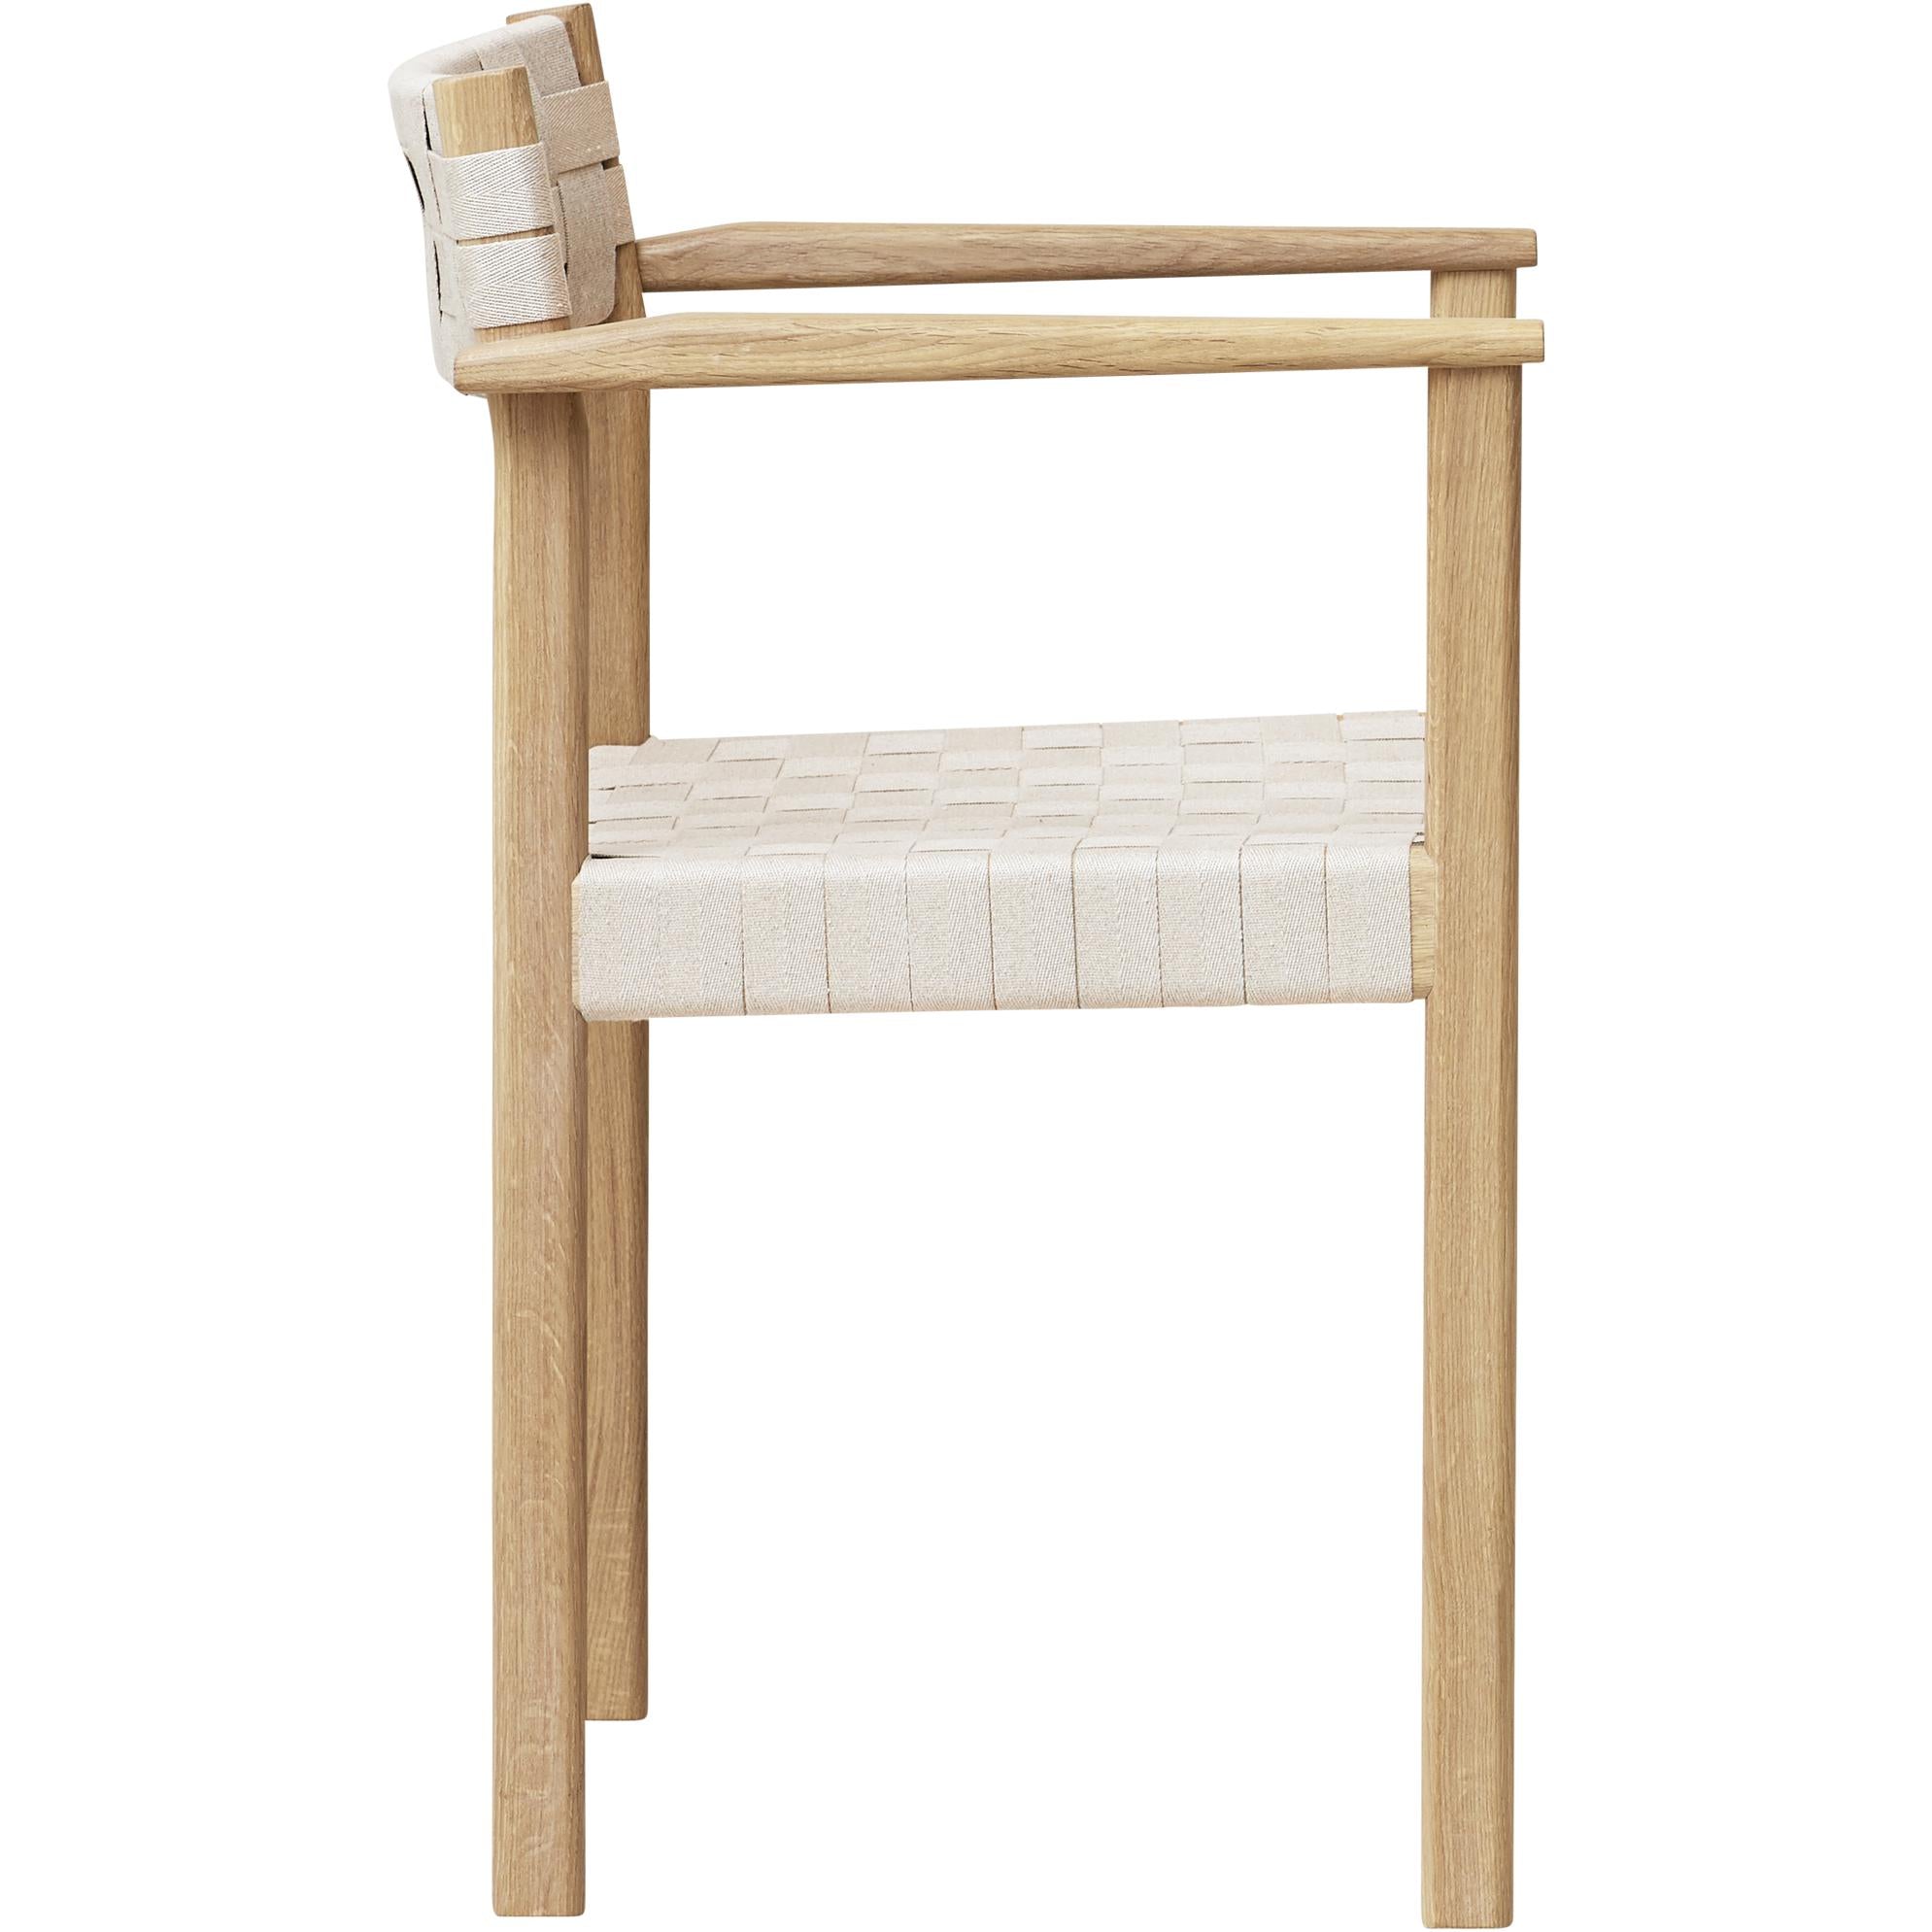 Form & Refine Motief fauteuil. Witte olie -eik